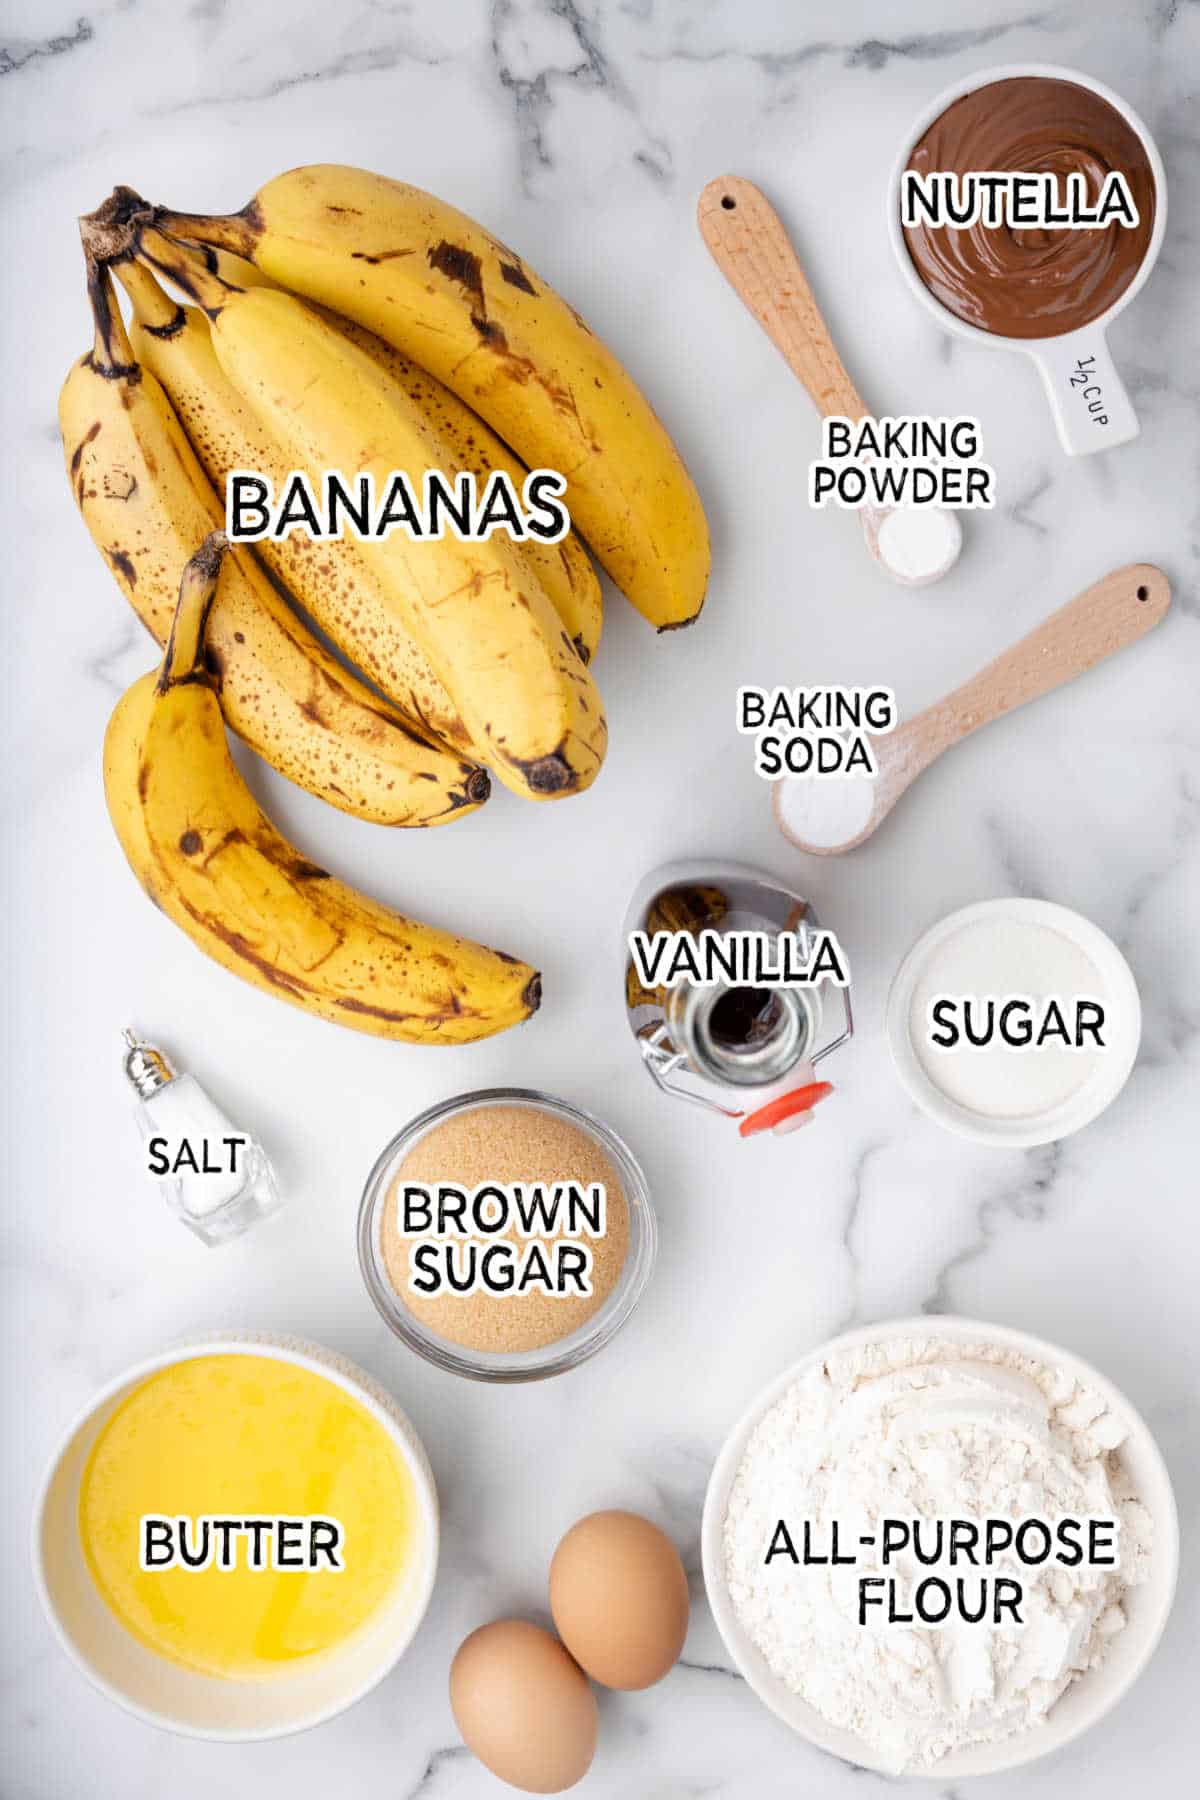 Ingredients to make Nutella Banana Bread.